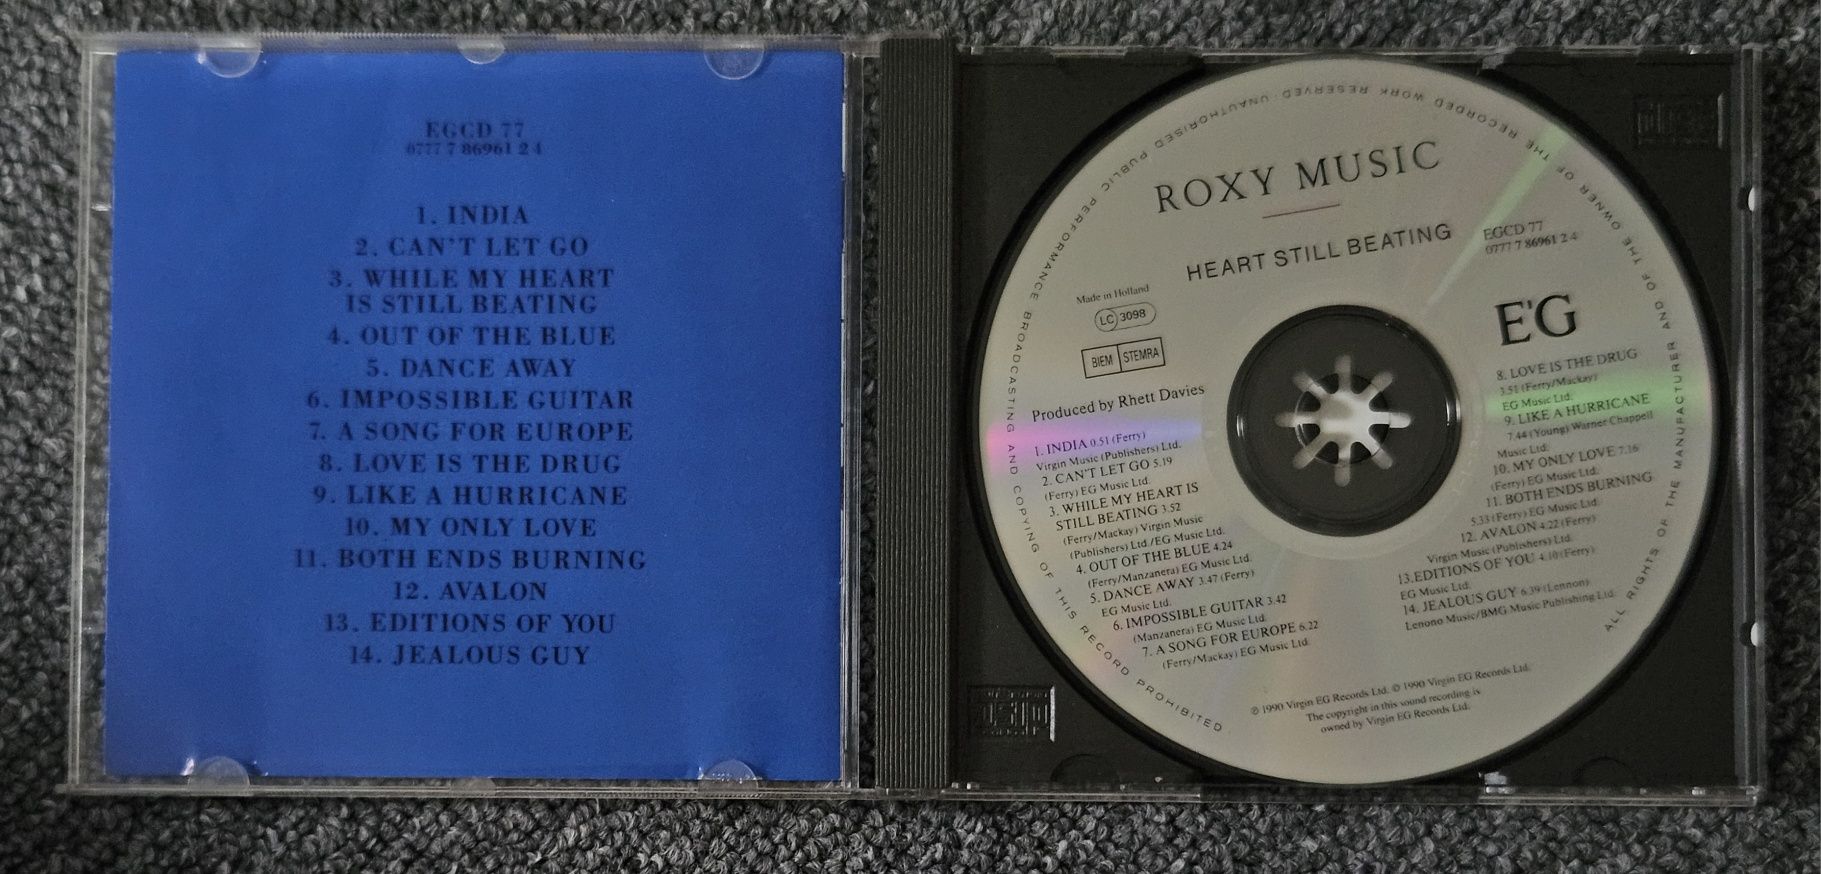 Roxy Music the Best of, heart still beating plyta cd